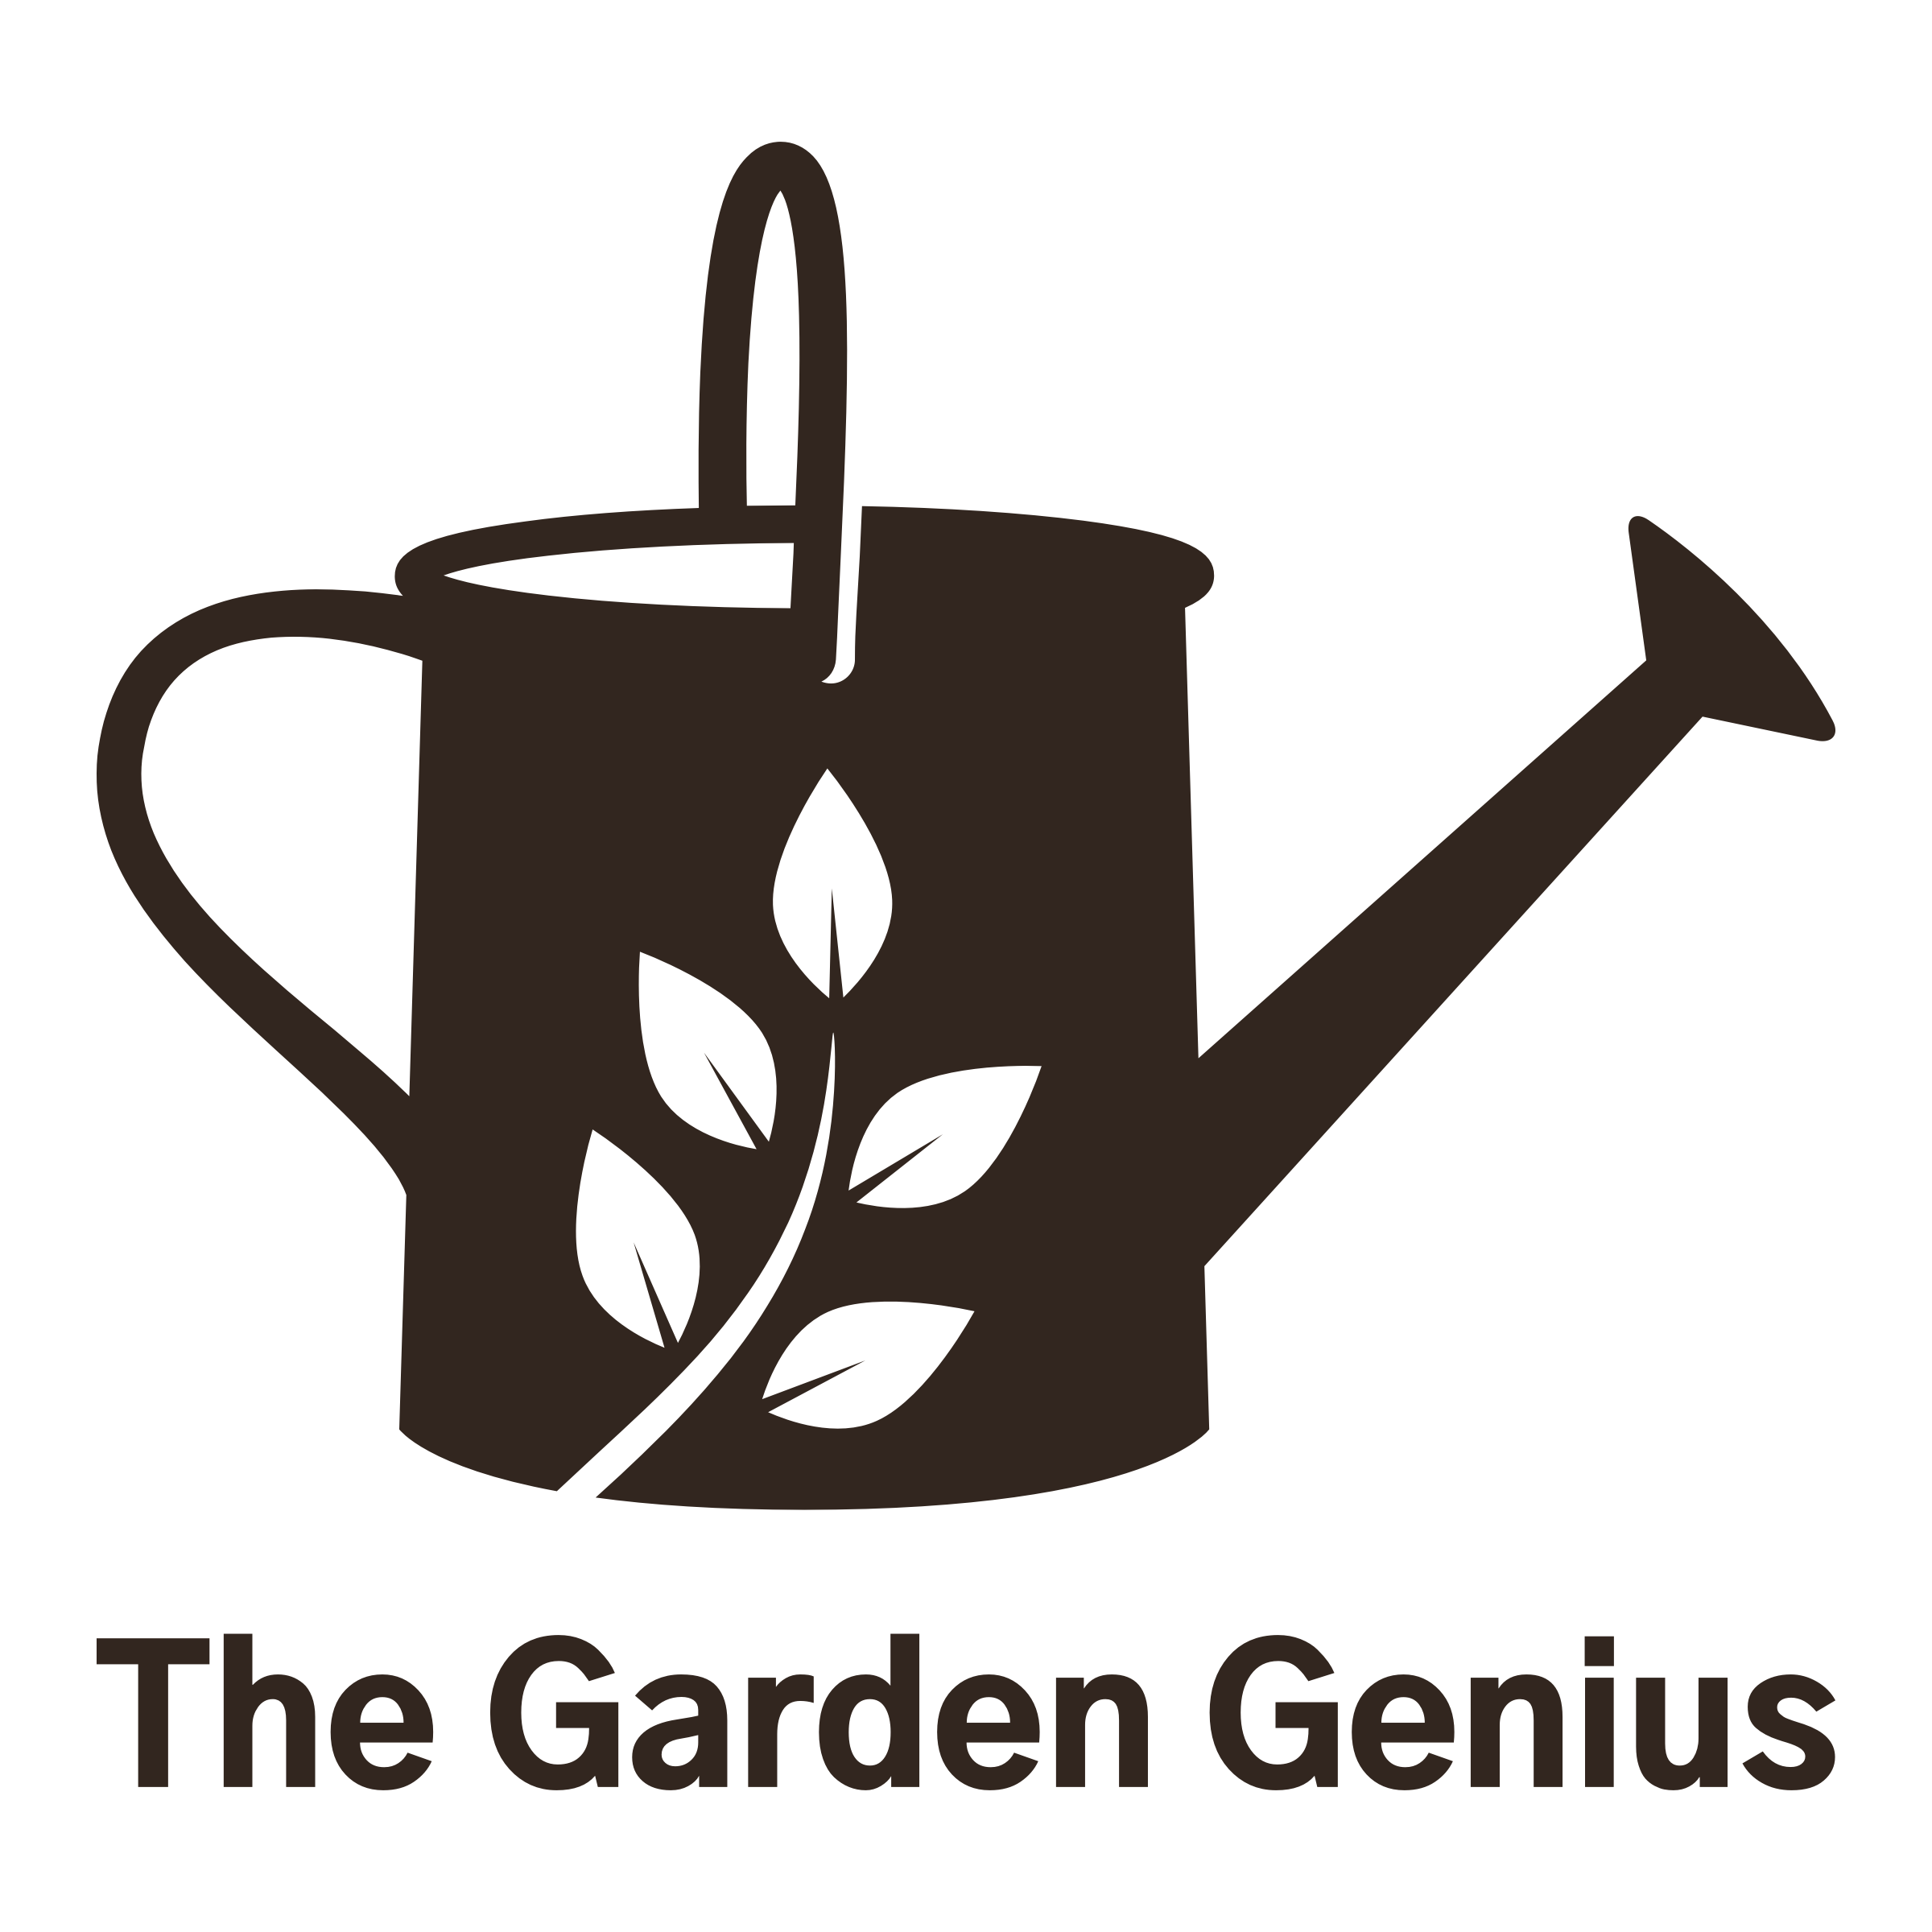 Free Gardening Logo Designs - DIY Gardening Logo Maker - Designmantic.com